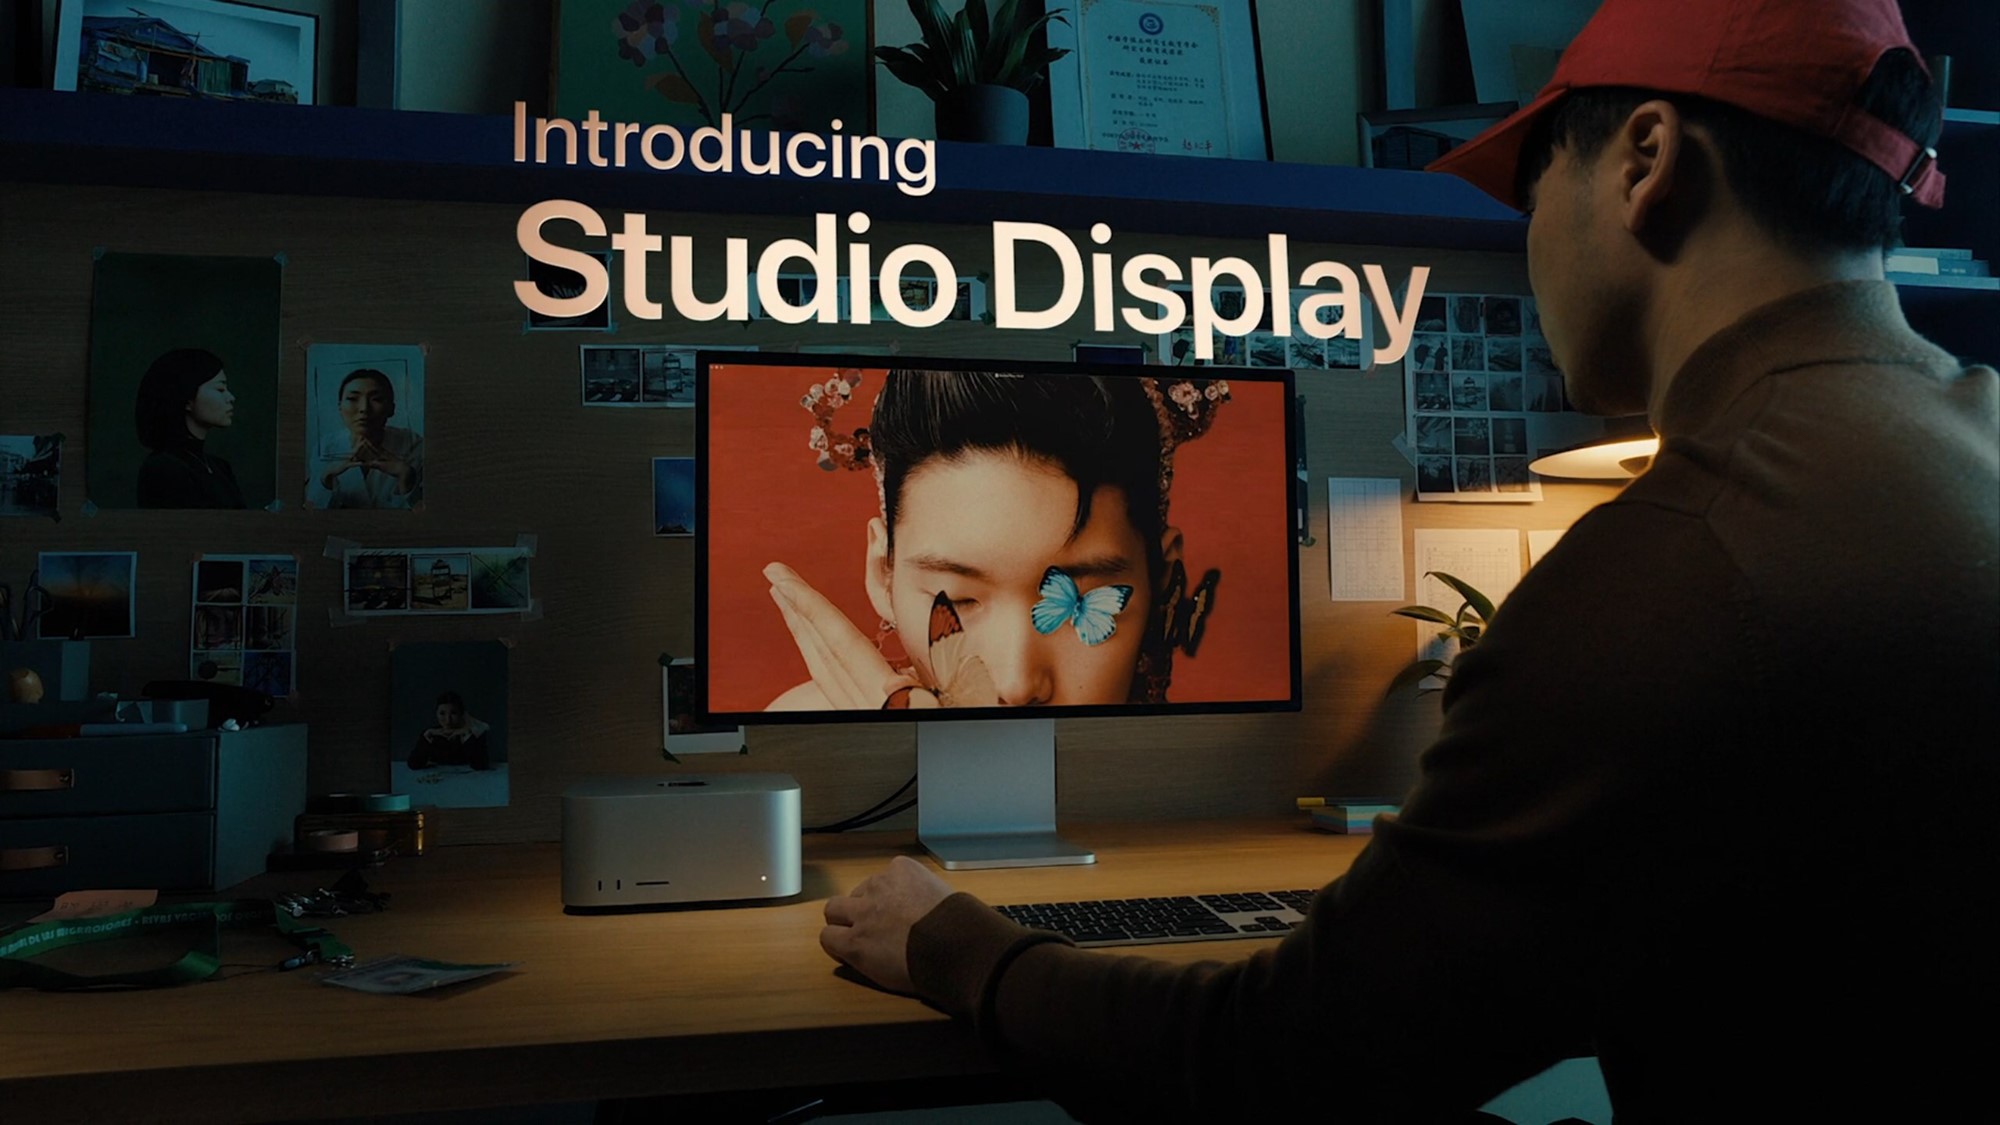 Mac Studio With M1 Ultra SoC Launched Alongside Studio Display 5K External  Monitor